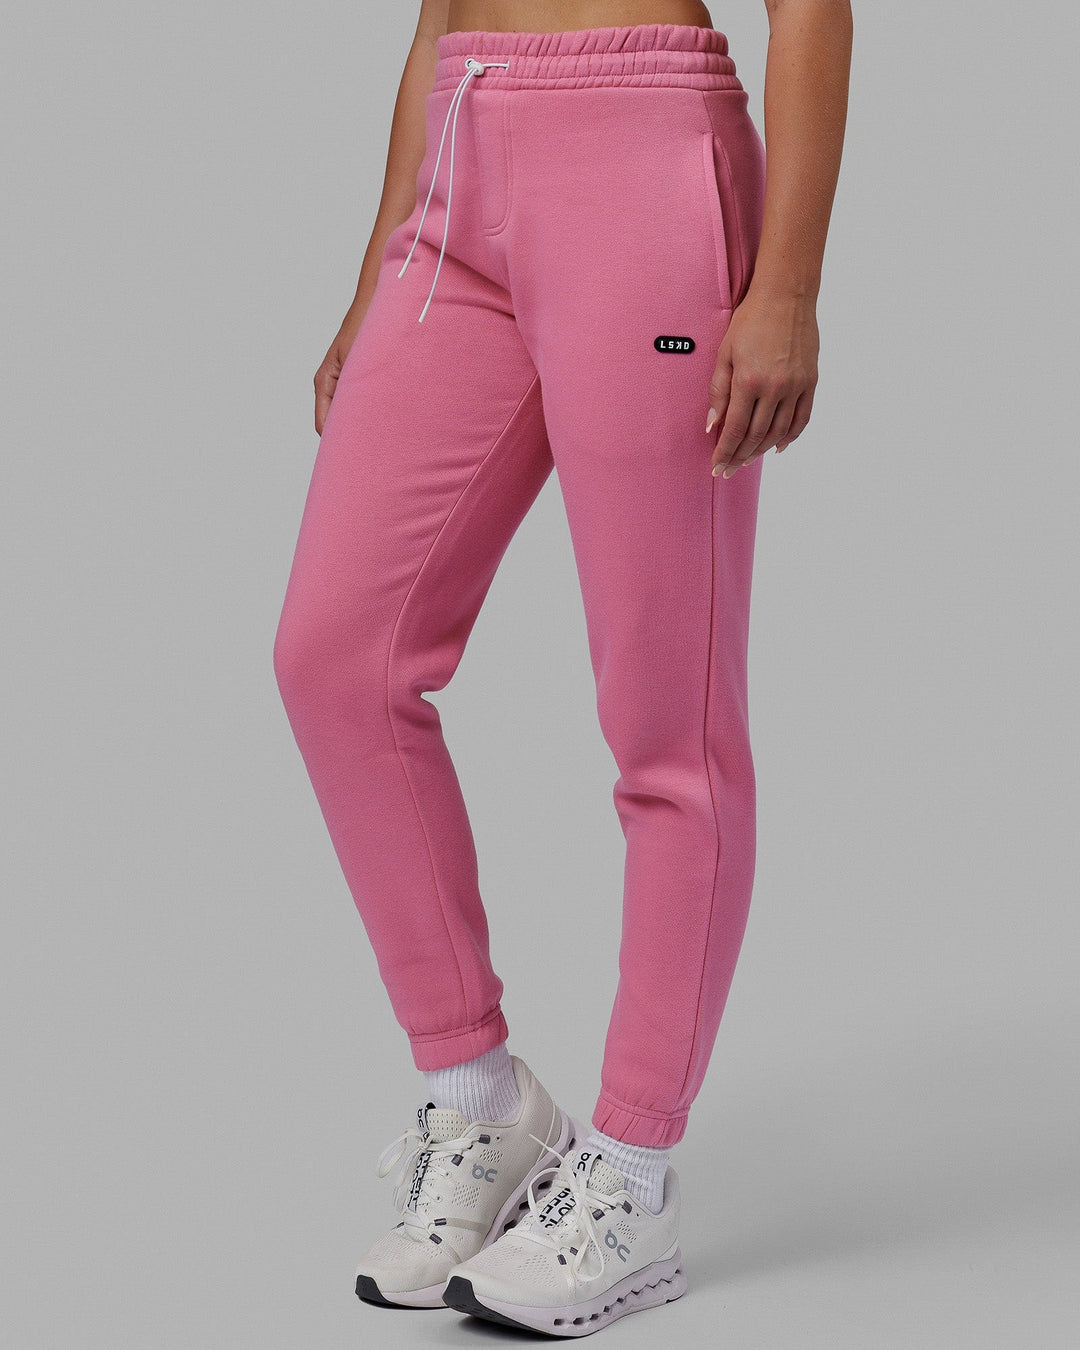 DAETIROS Women Pants on Clearance Daily Sports Pants Trousers Jogging  Sweatpants Jogger Pants Hot Pink Size L 